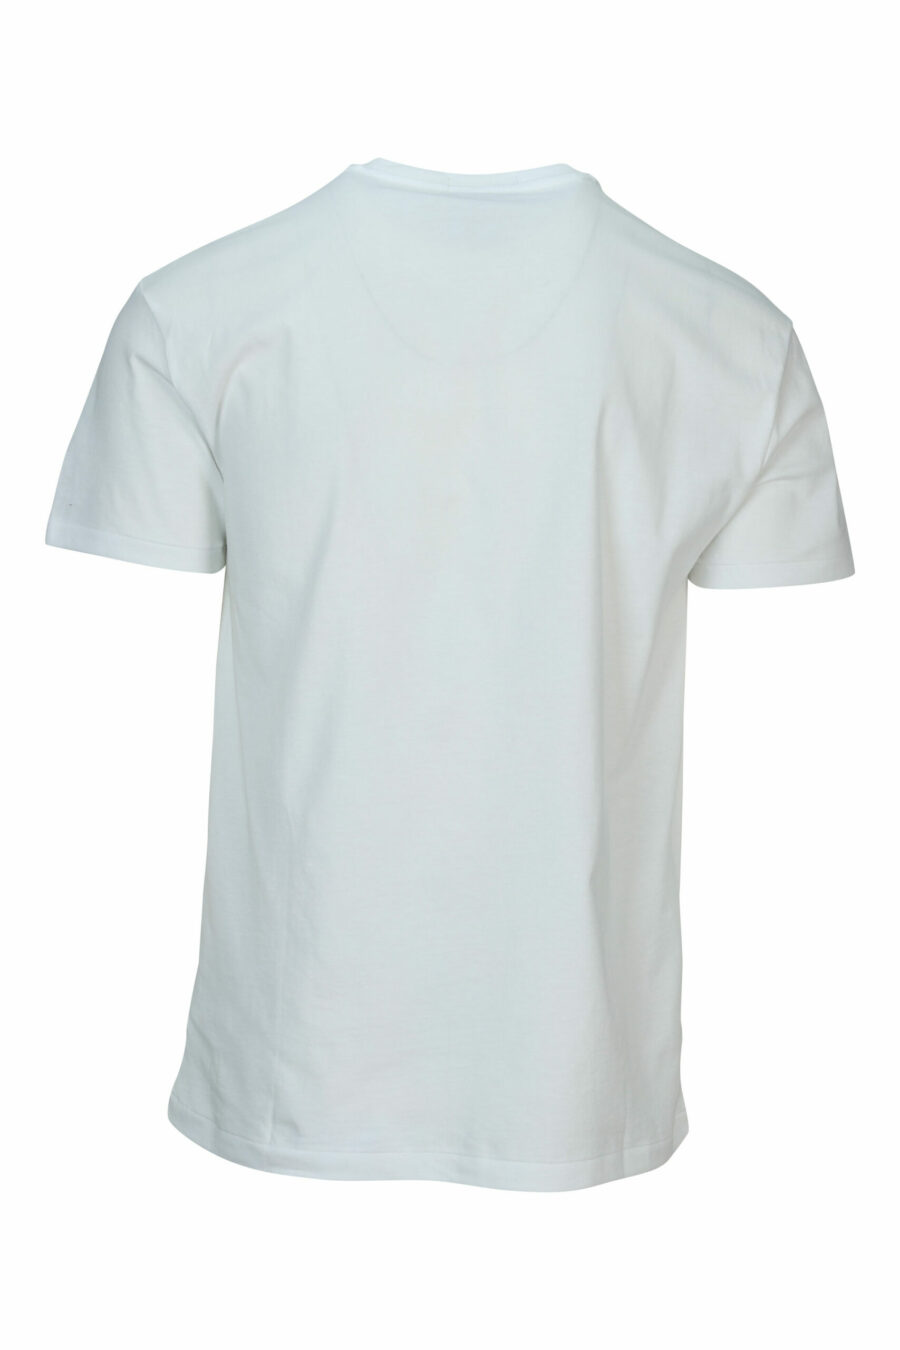 Weißes T-Shirt mit Maxilogo "Polobär" Strandbekleidung - 3616535843479 1 skaliert